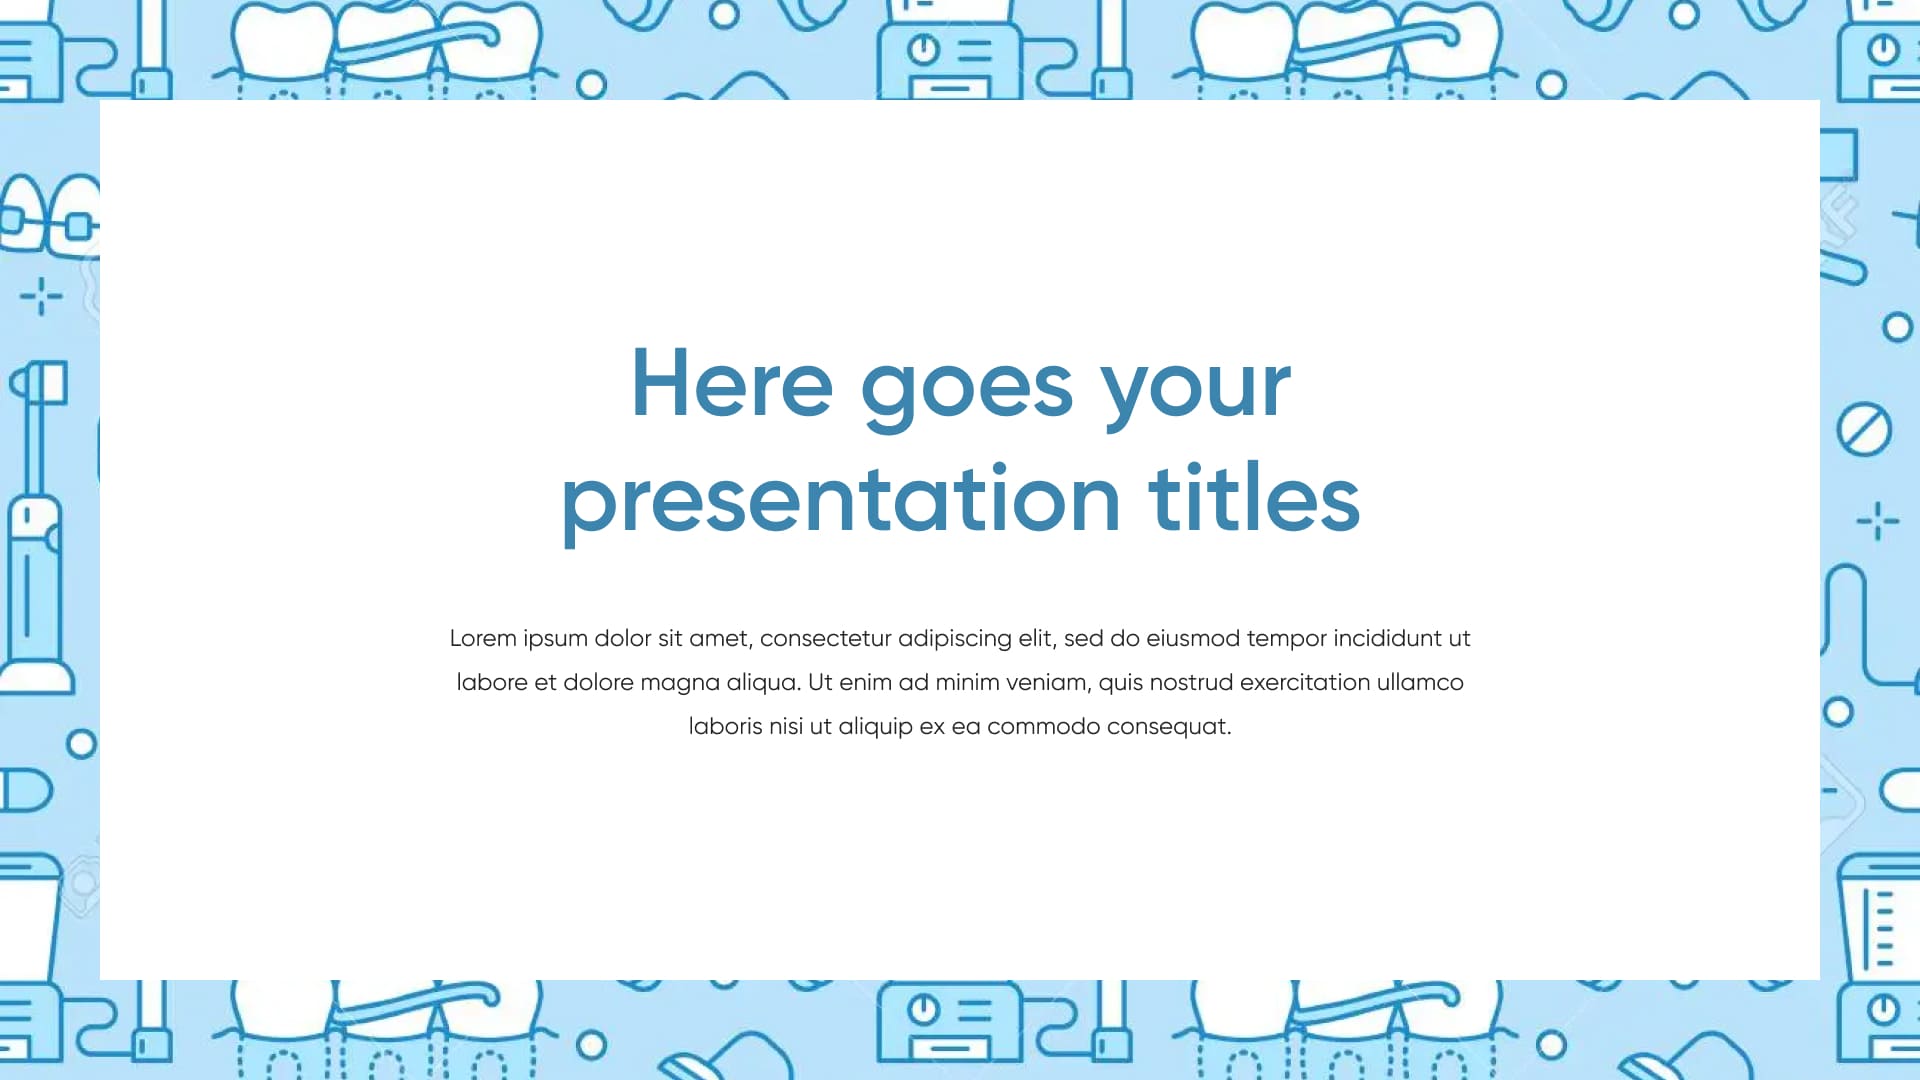 Presentation slides and others.